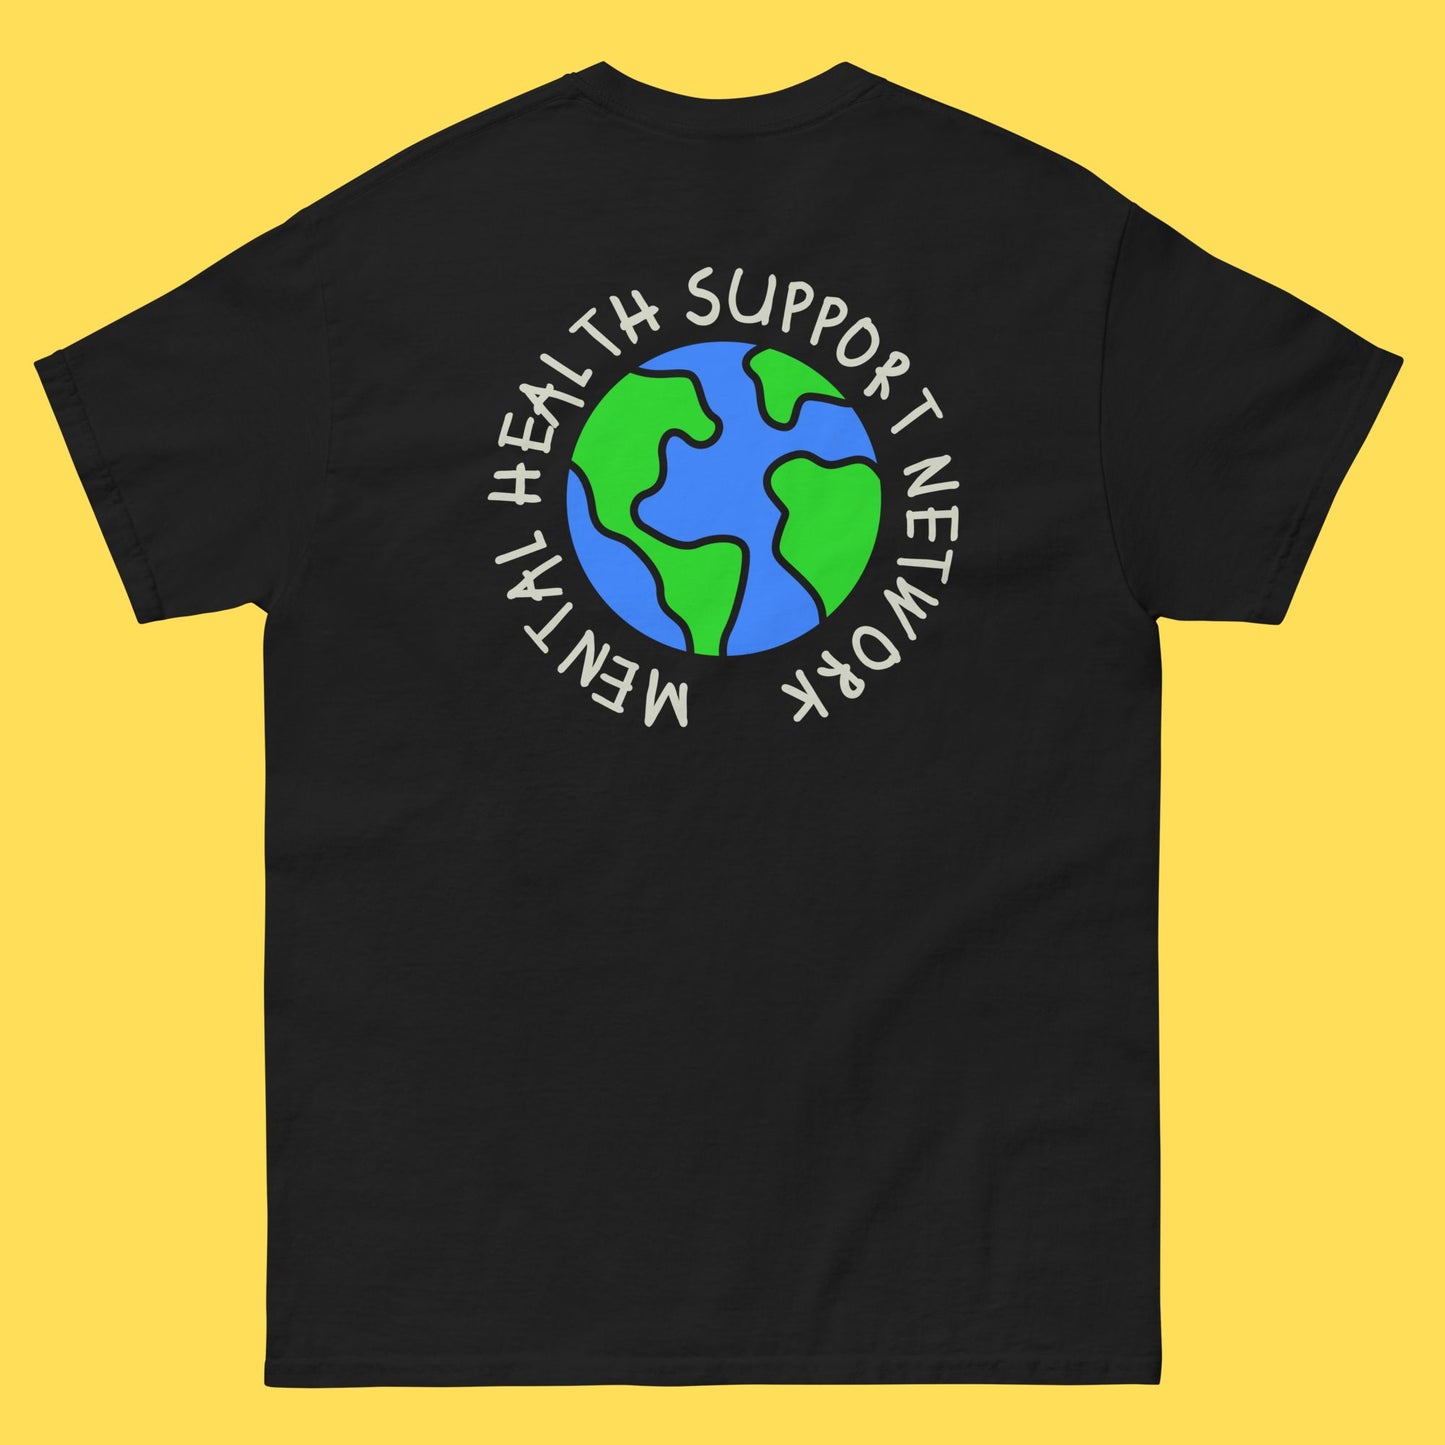 Mental Health Support Network T-Shirt (Black)